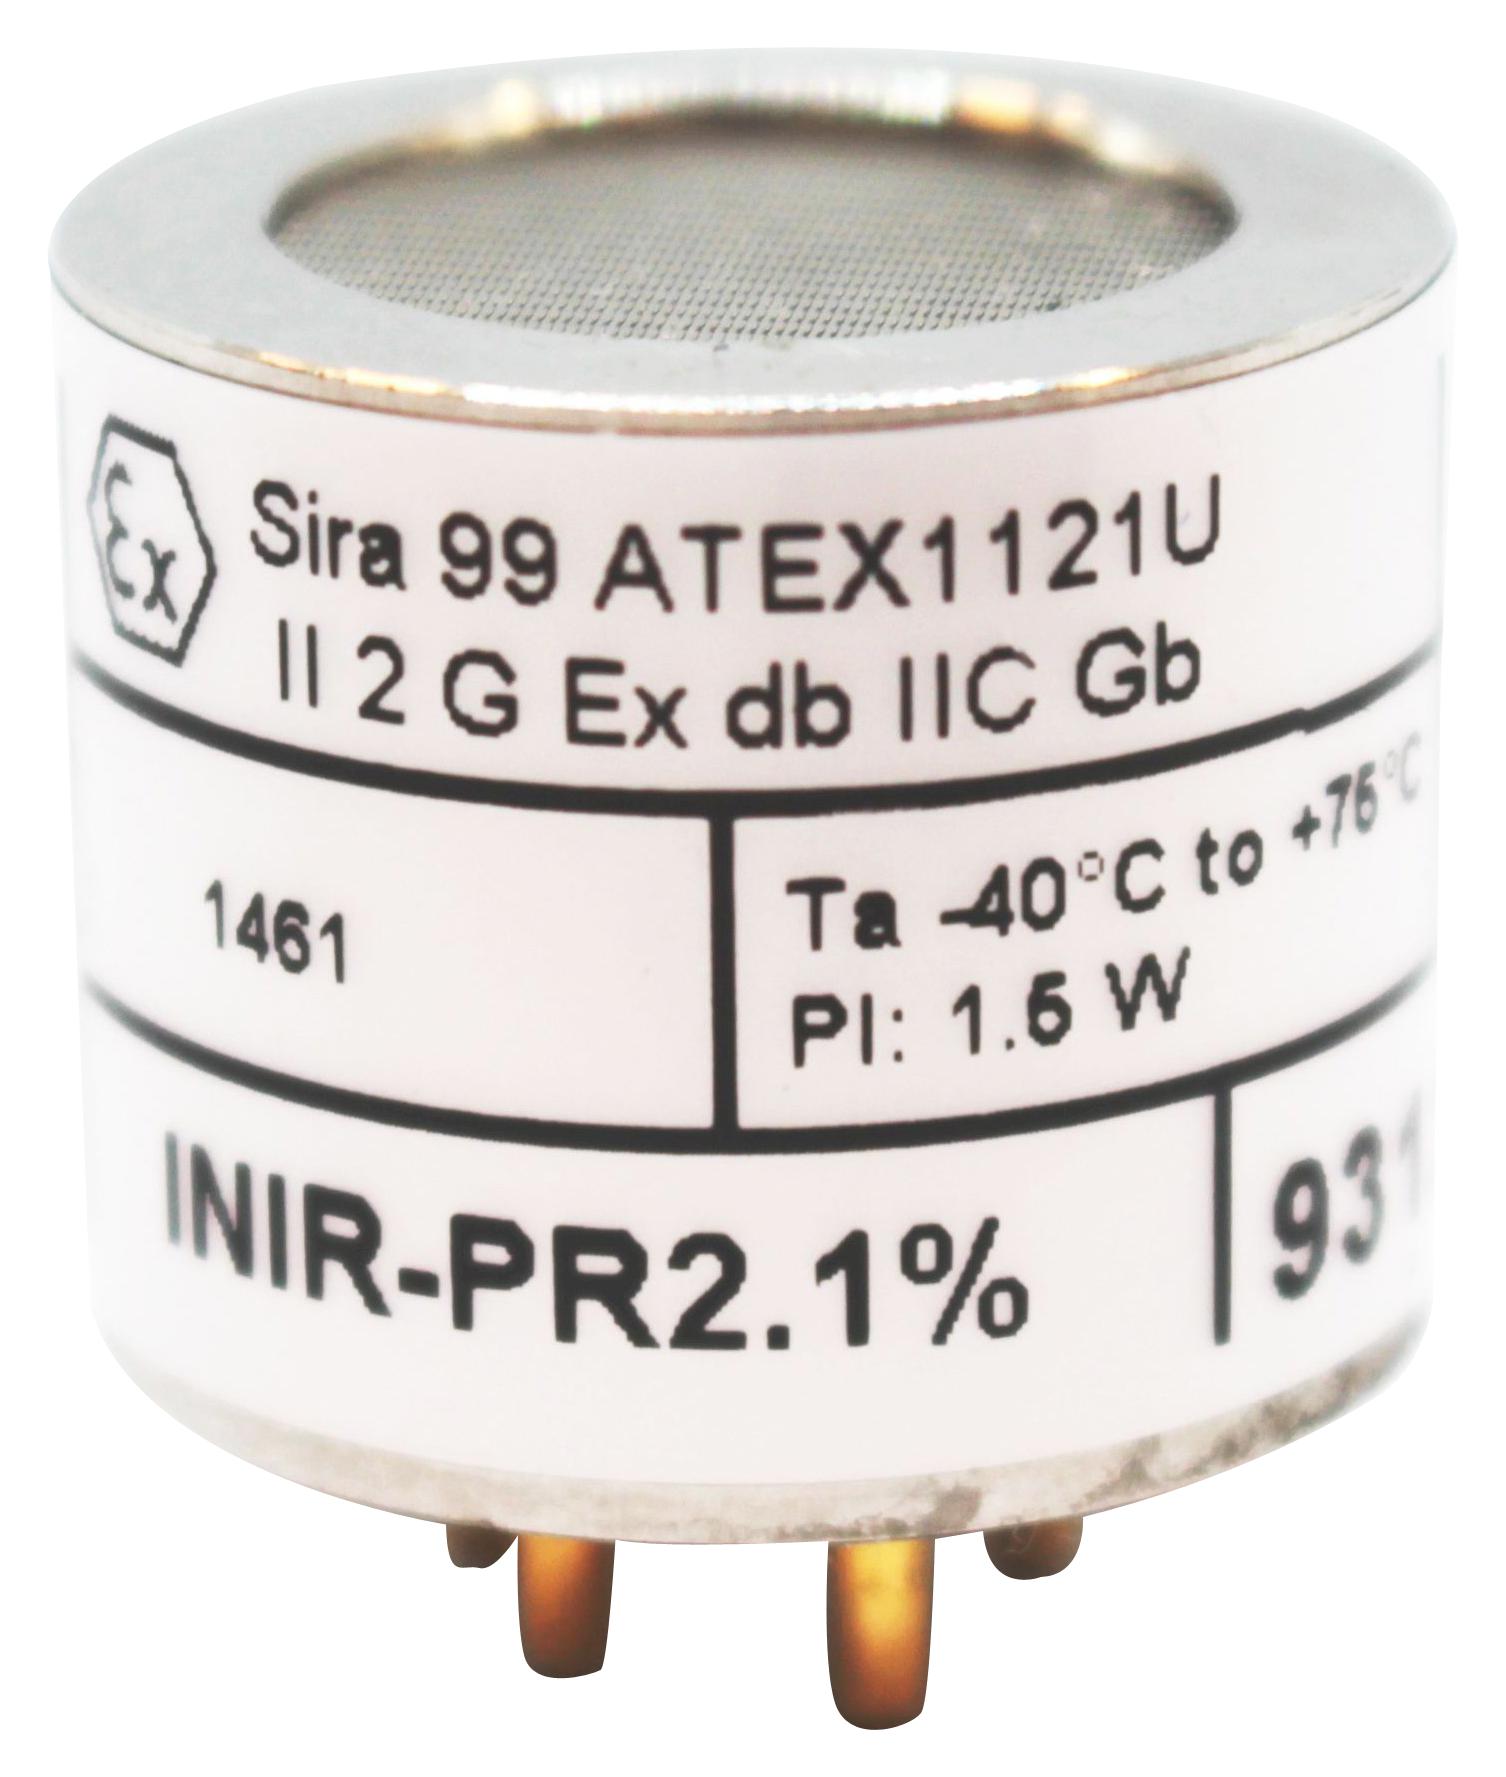 Amphenol SGX Sensortech Inir-Pr2.1% Gas Detect Sensor, Propane, 100Ppm, Inir